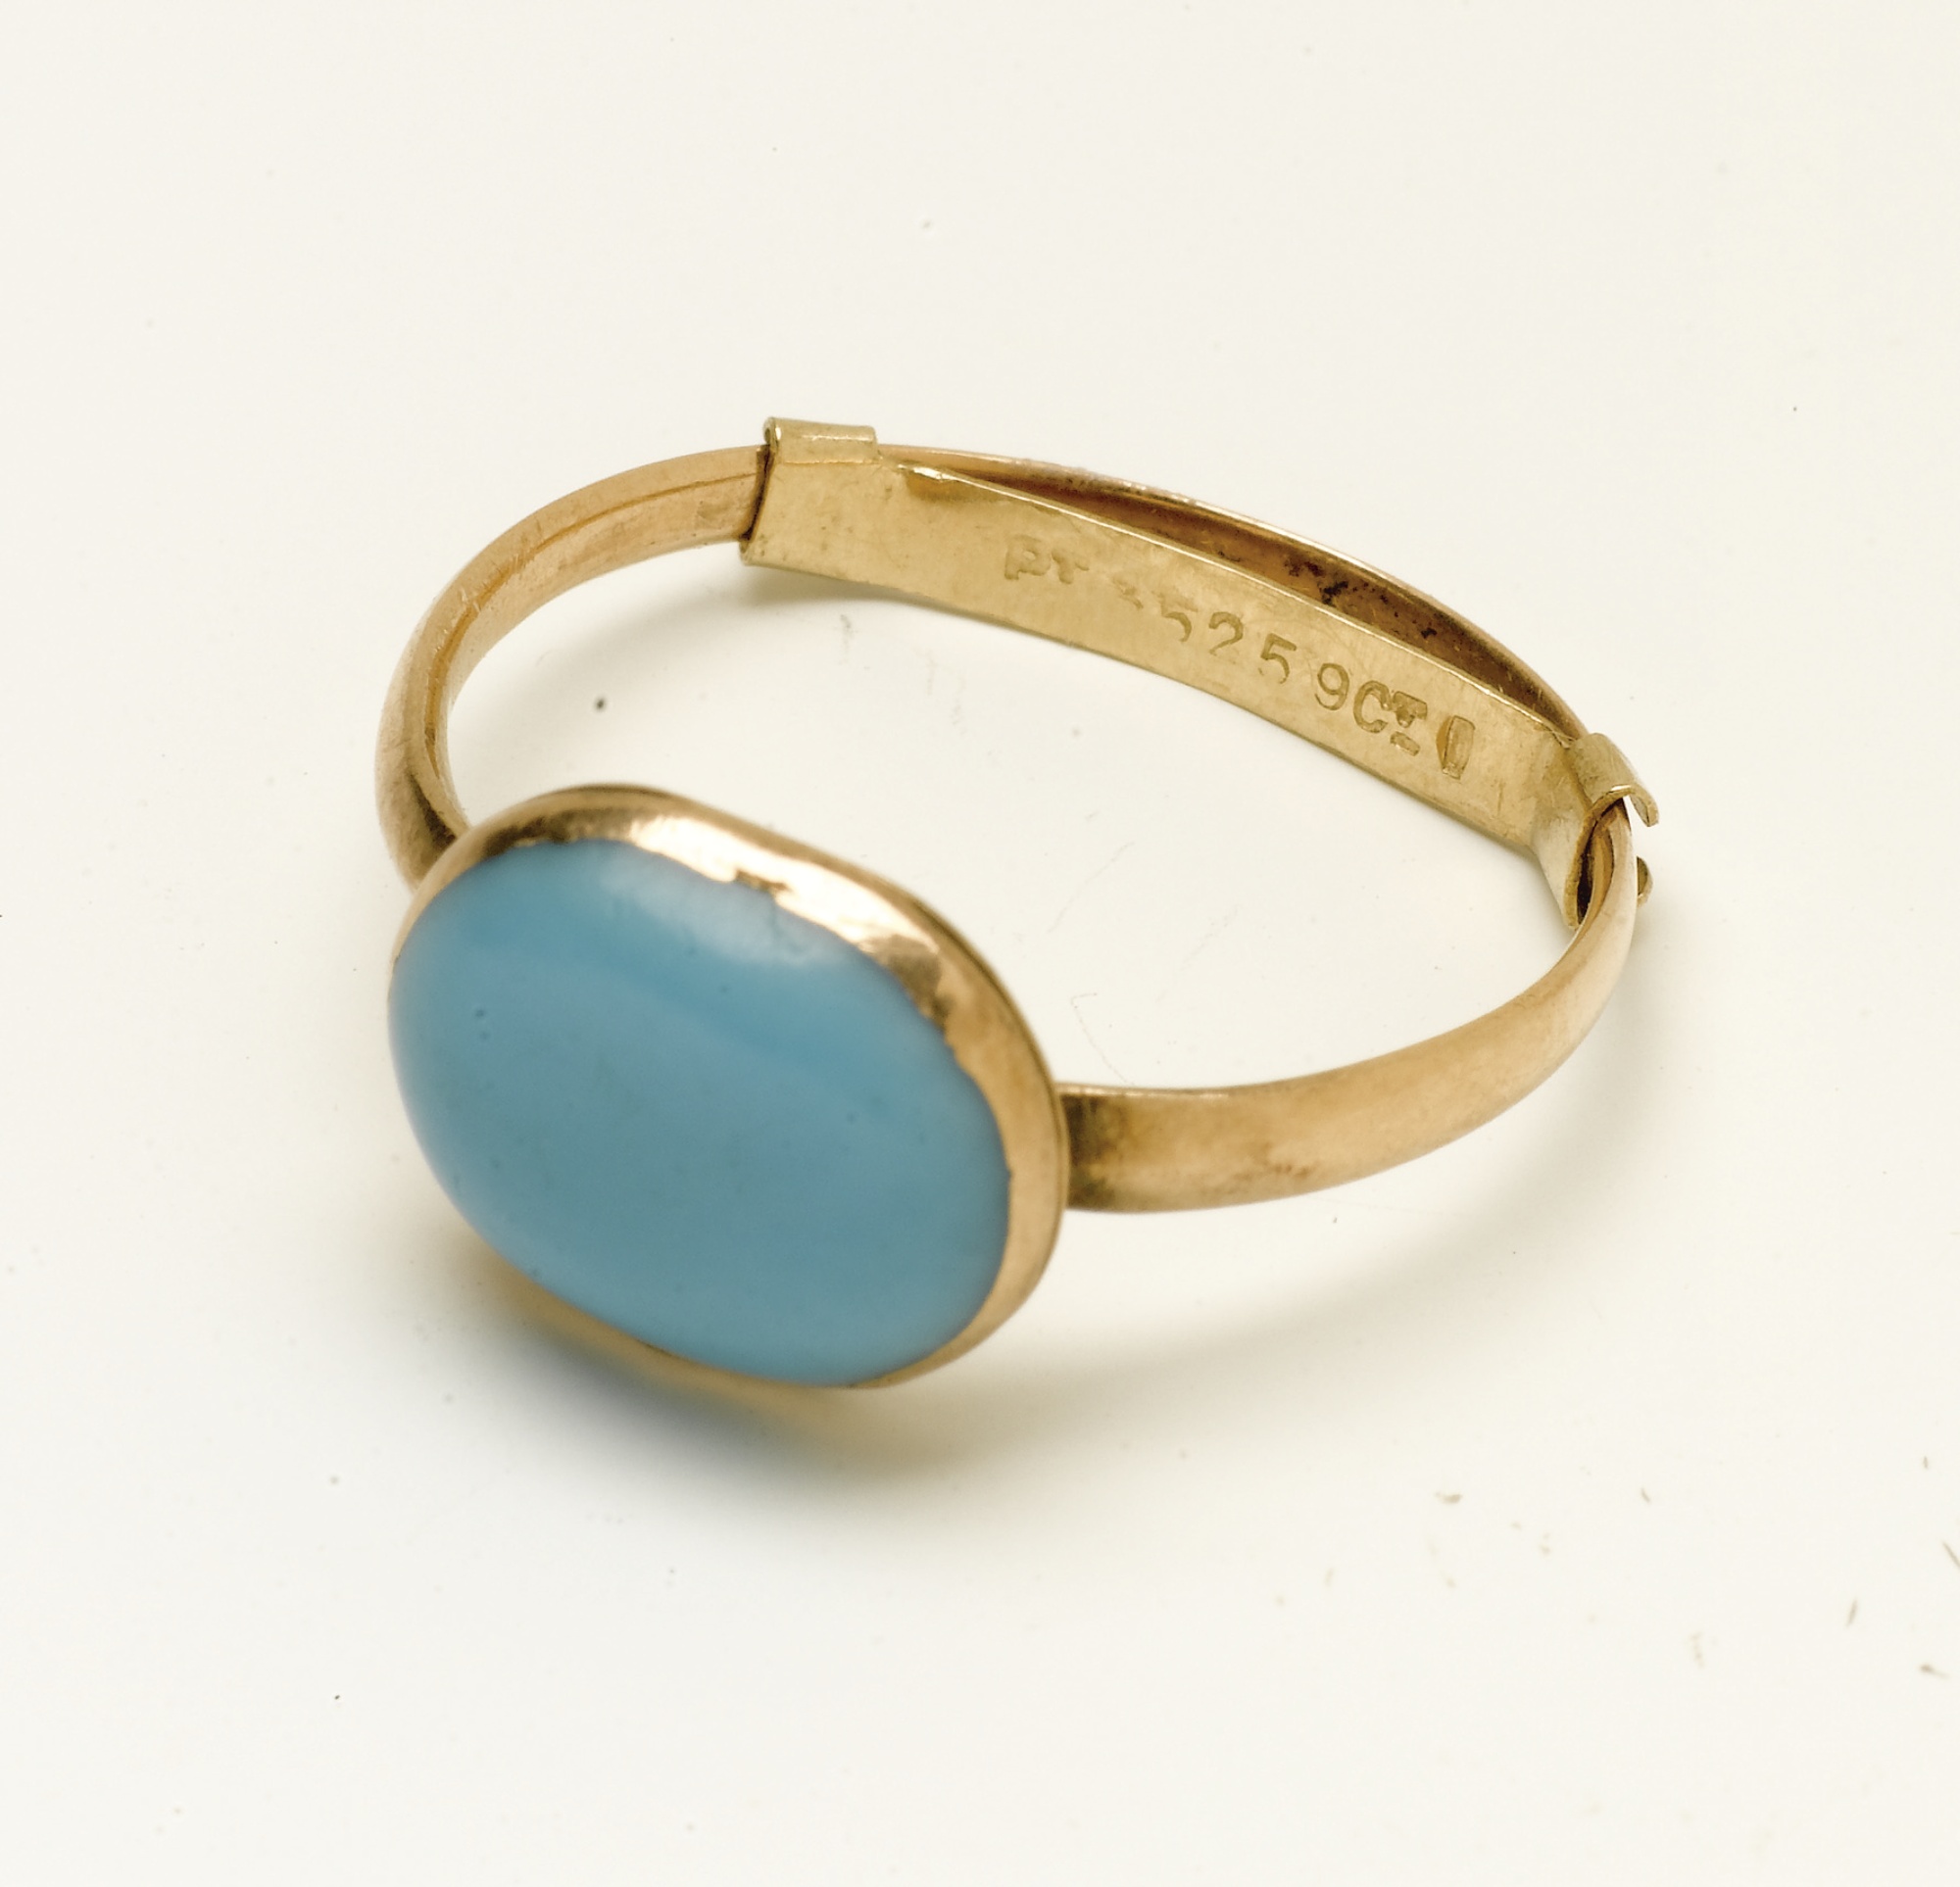 1783 iron gold wedding ring